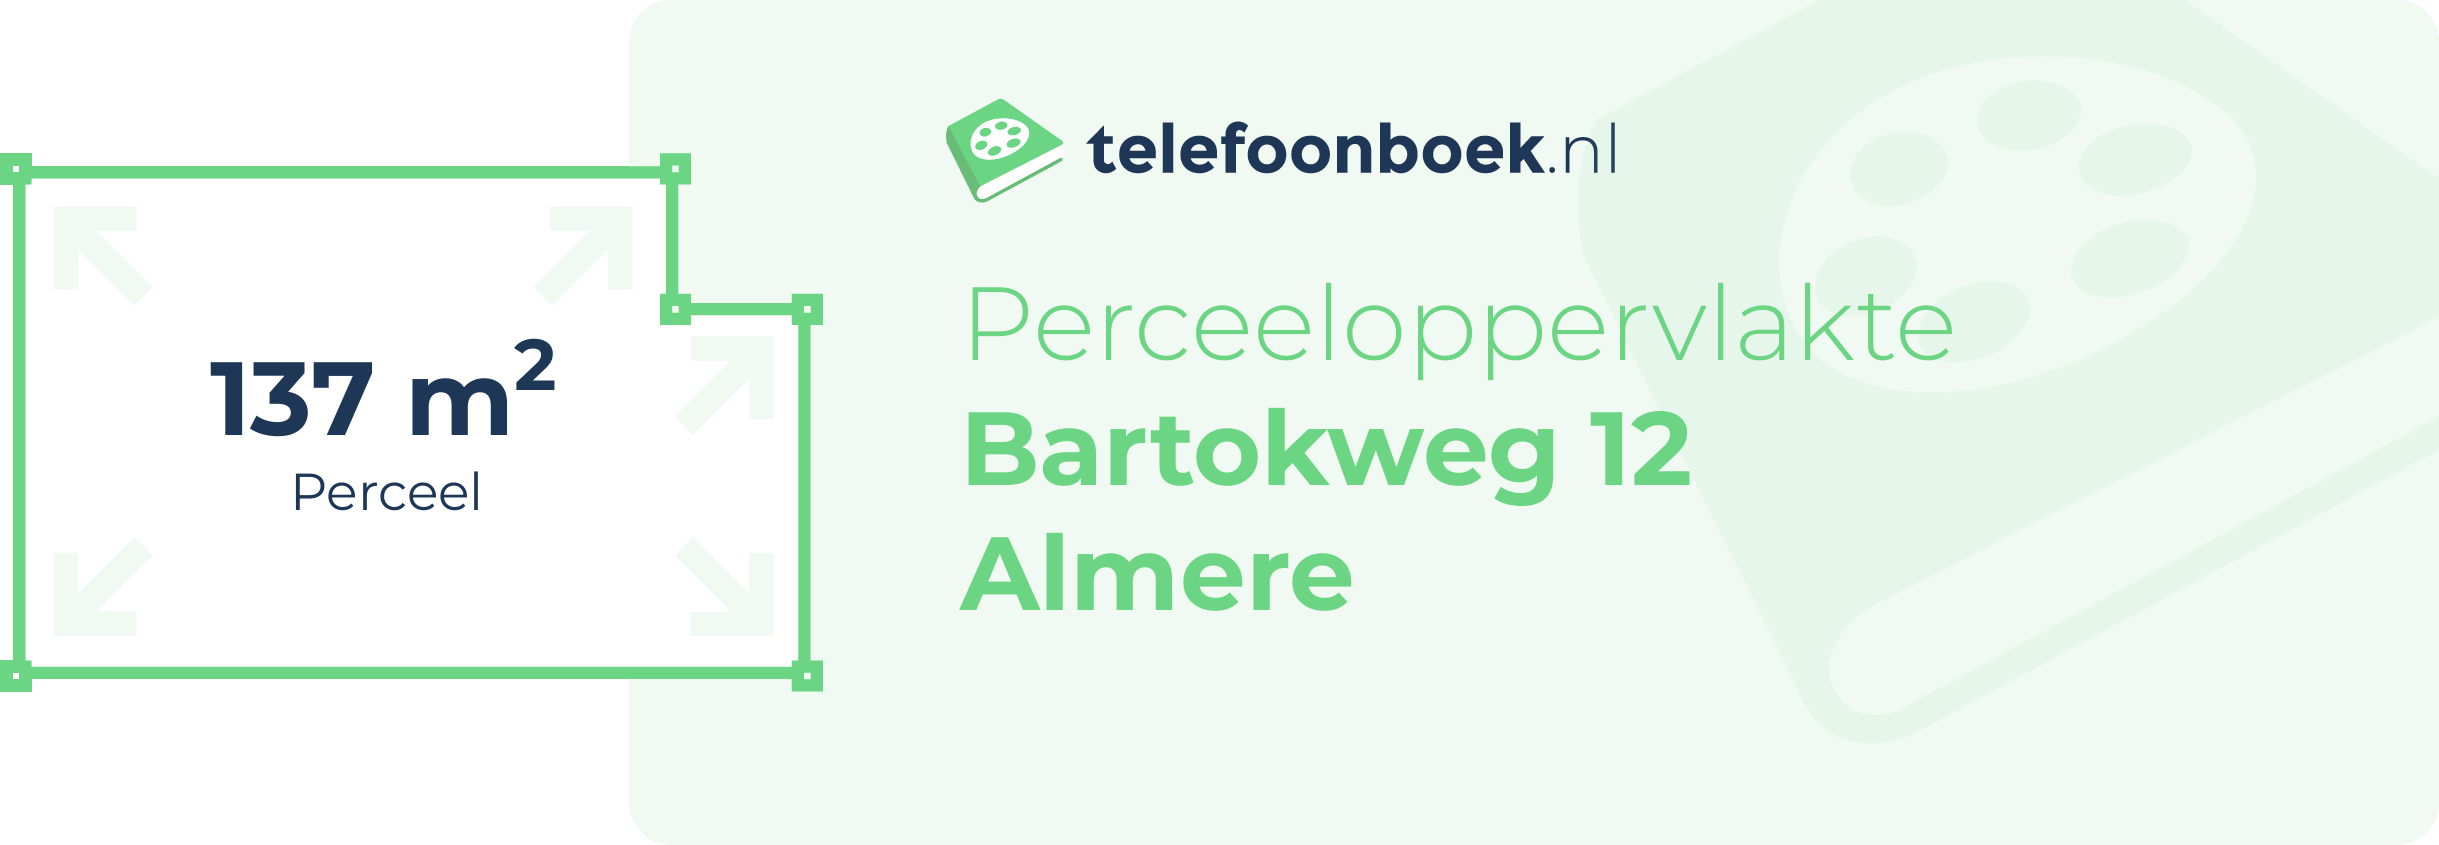 Perceeloppervlakte Bartokweg 12 Almere